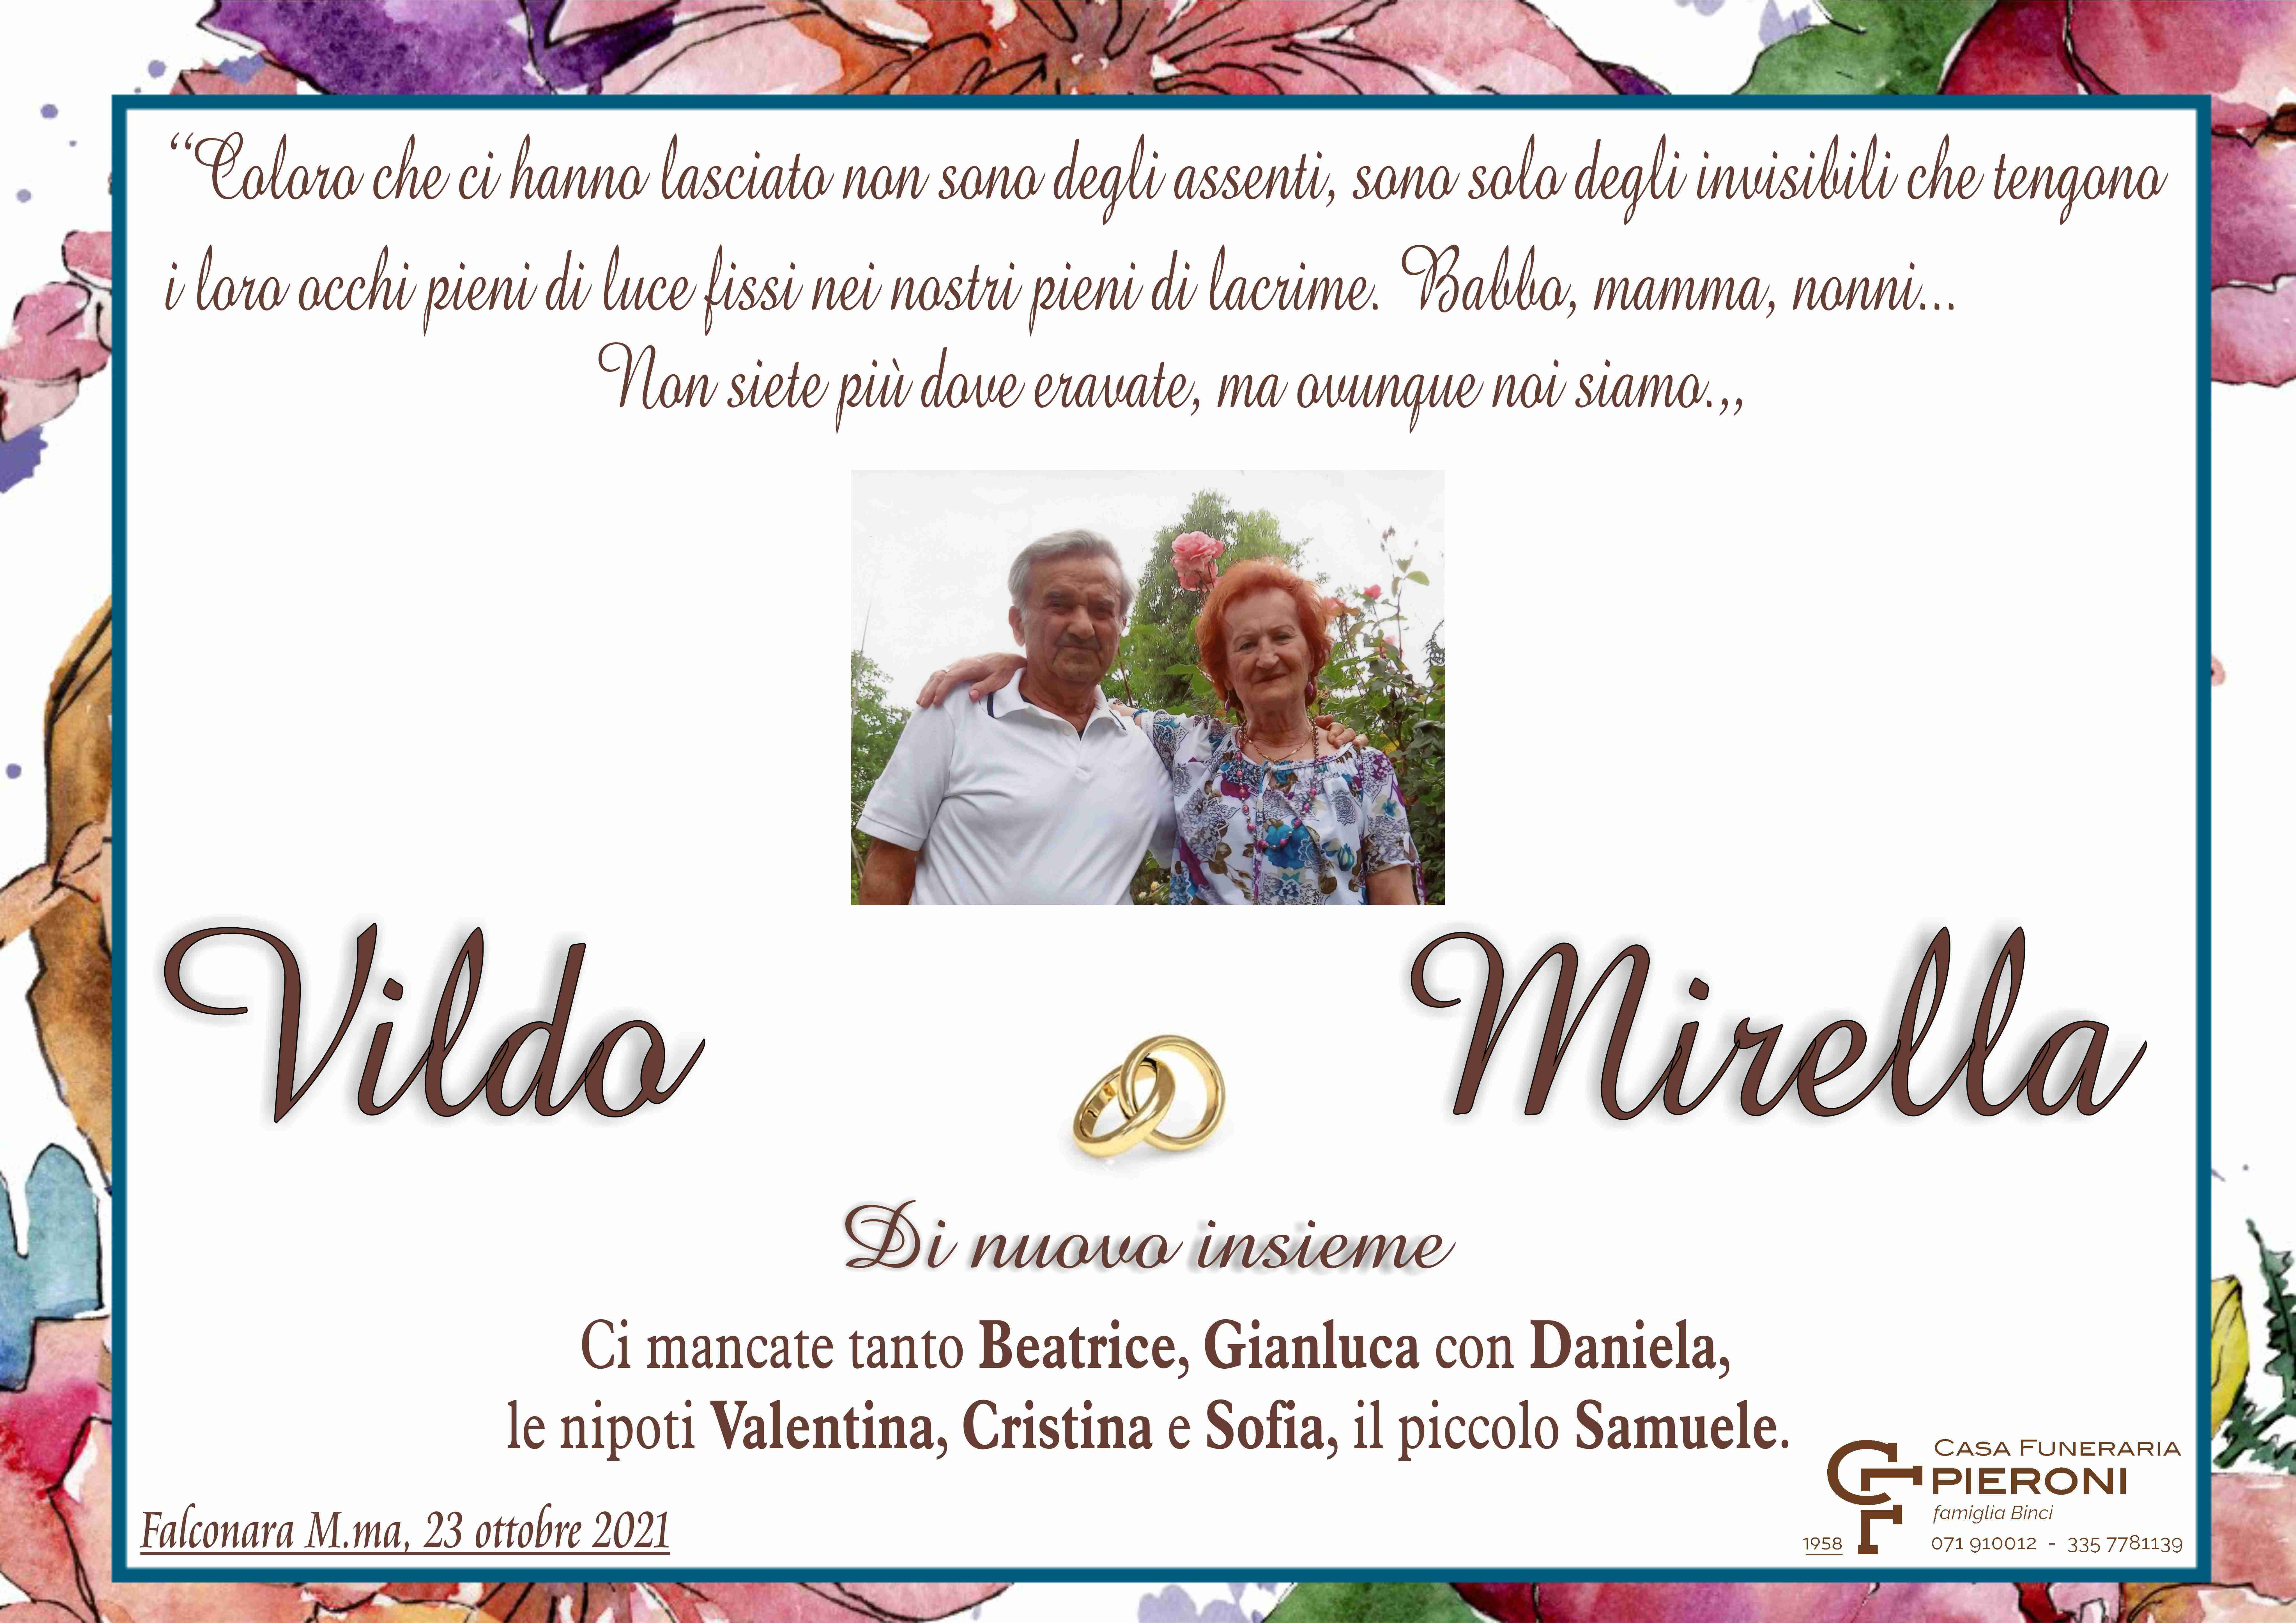 Vildo e Mirella